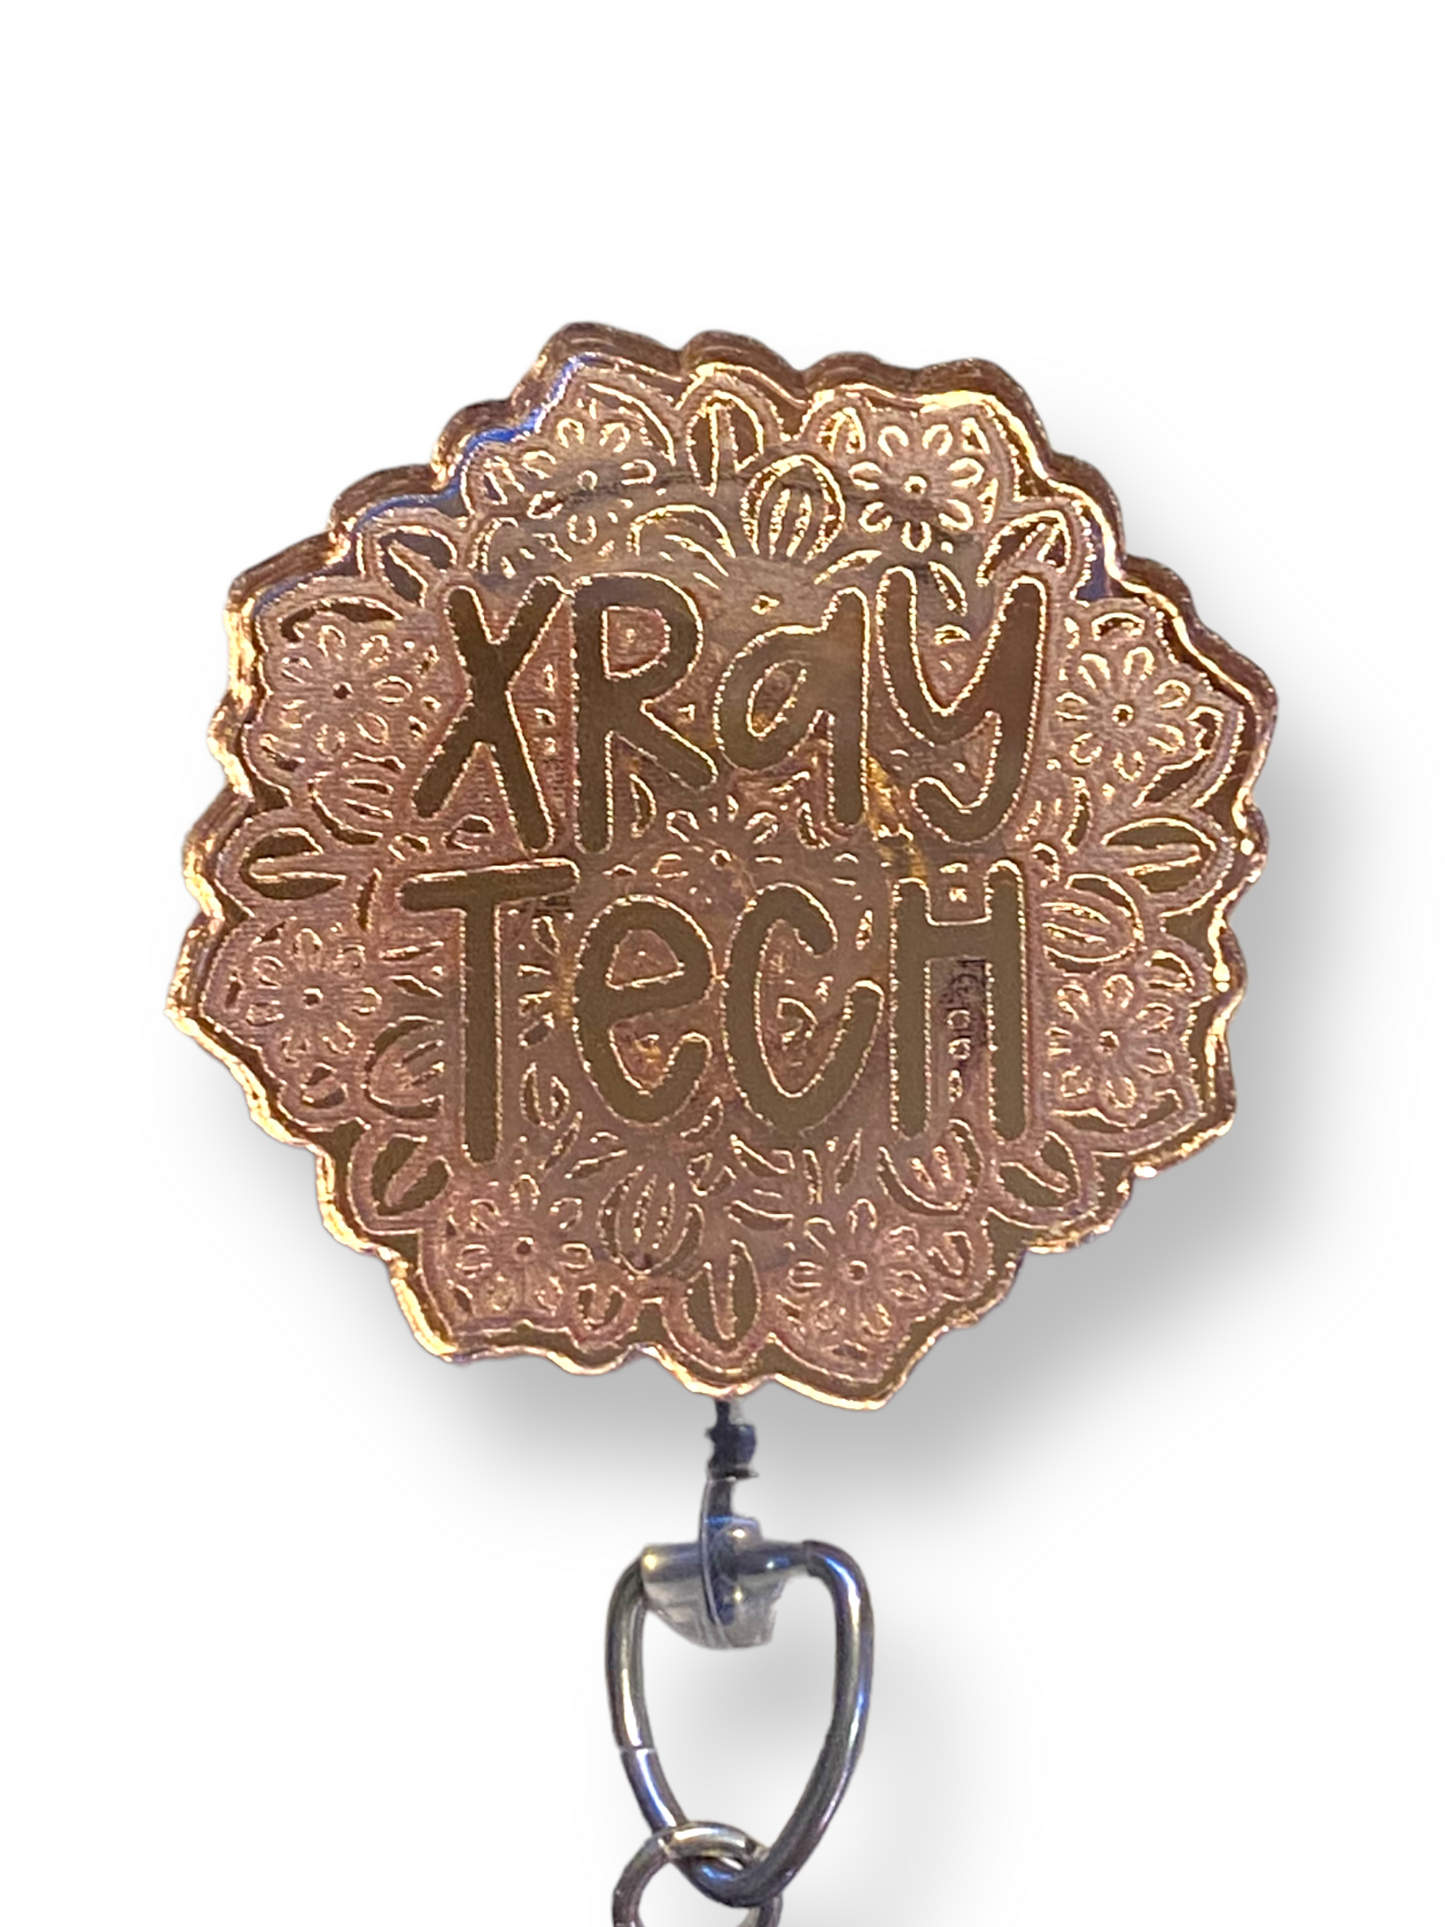 Badge Reel Rose Gold Floral Xray Tech